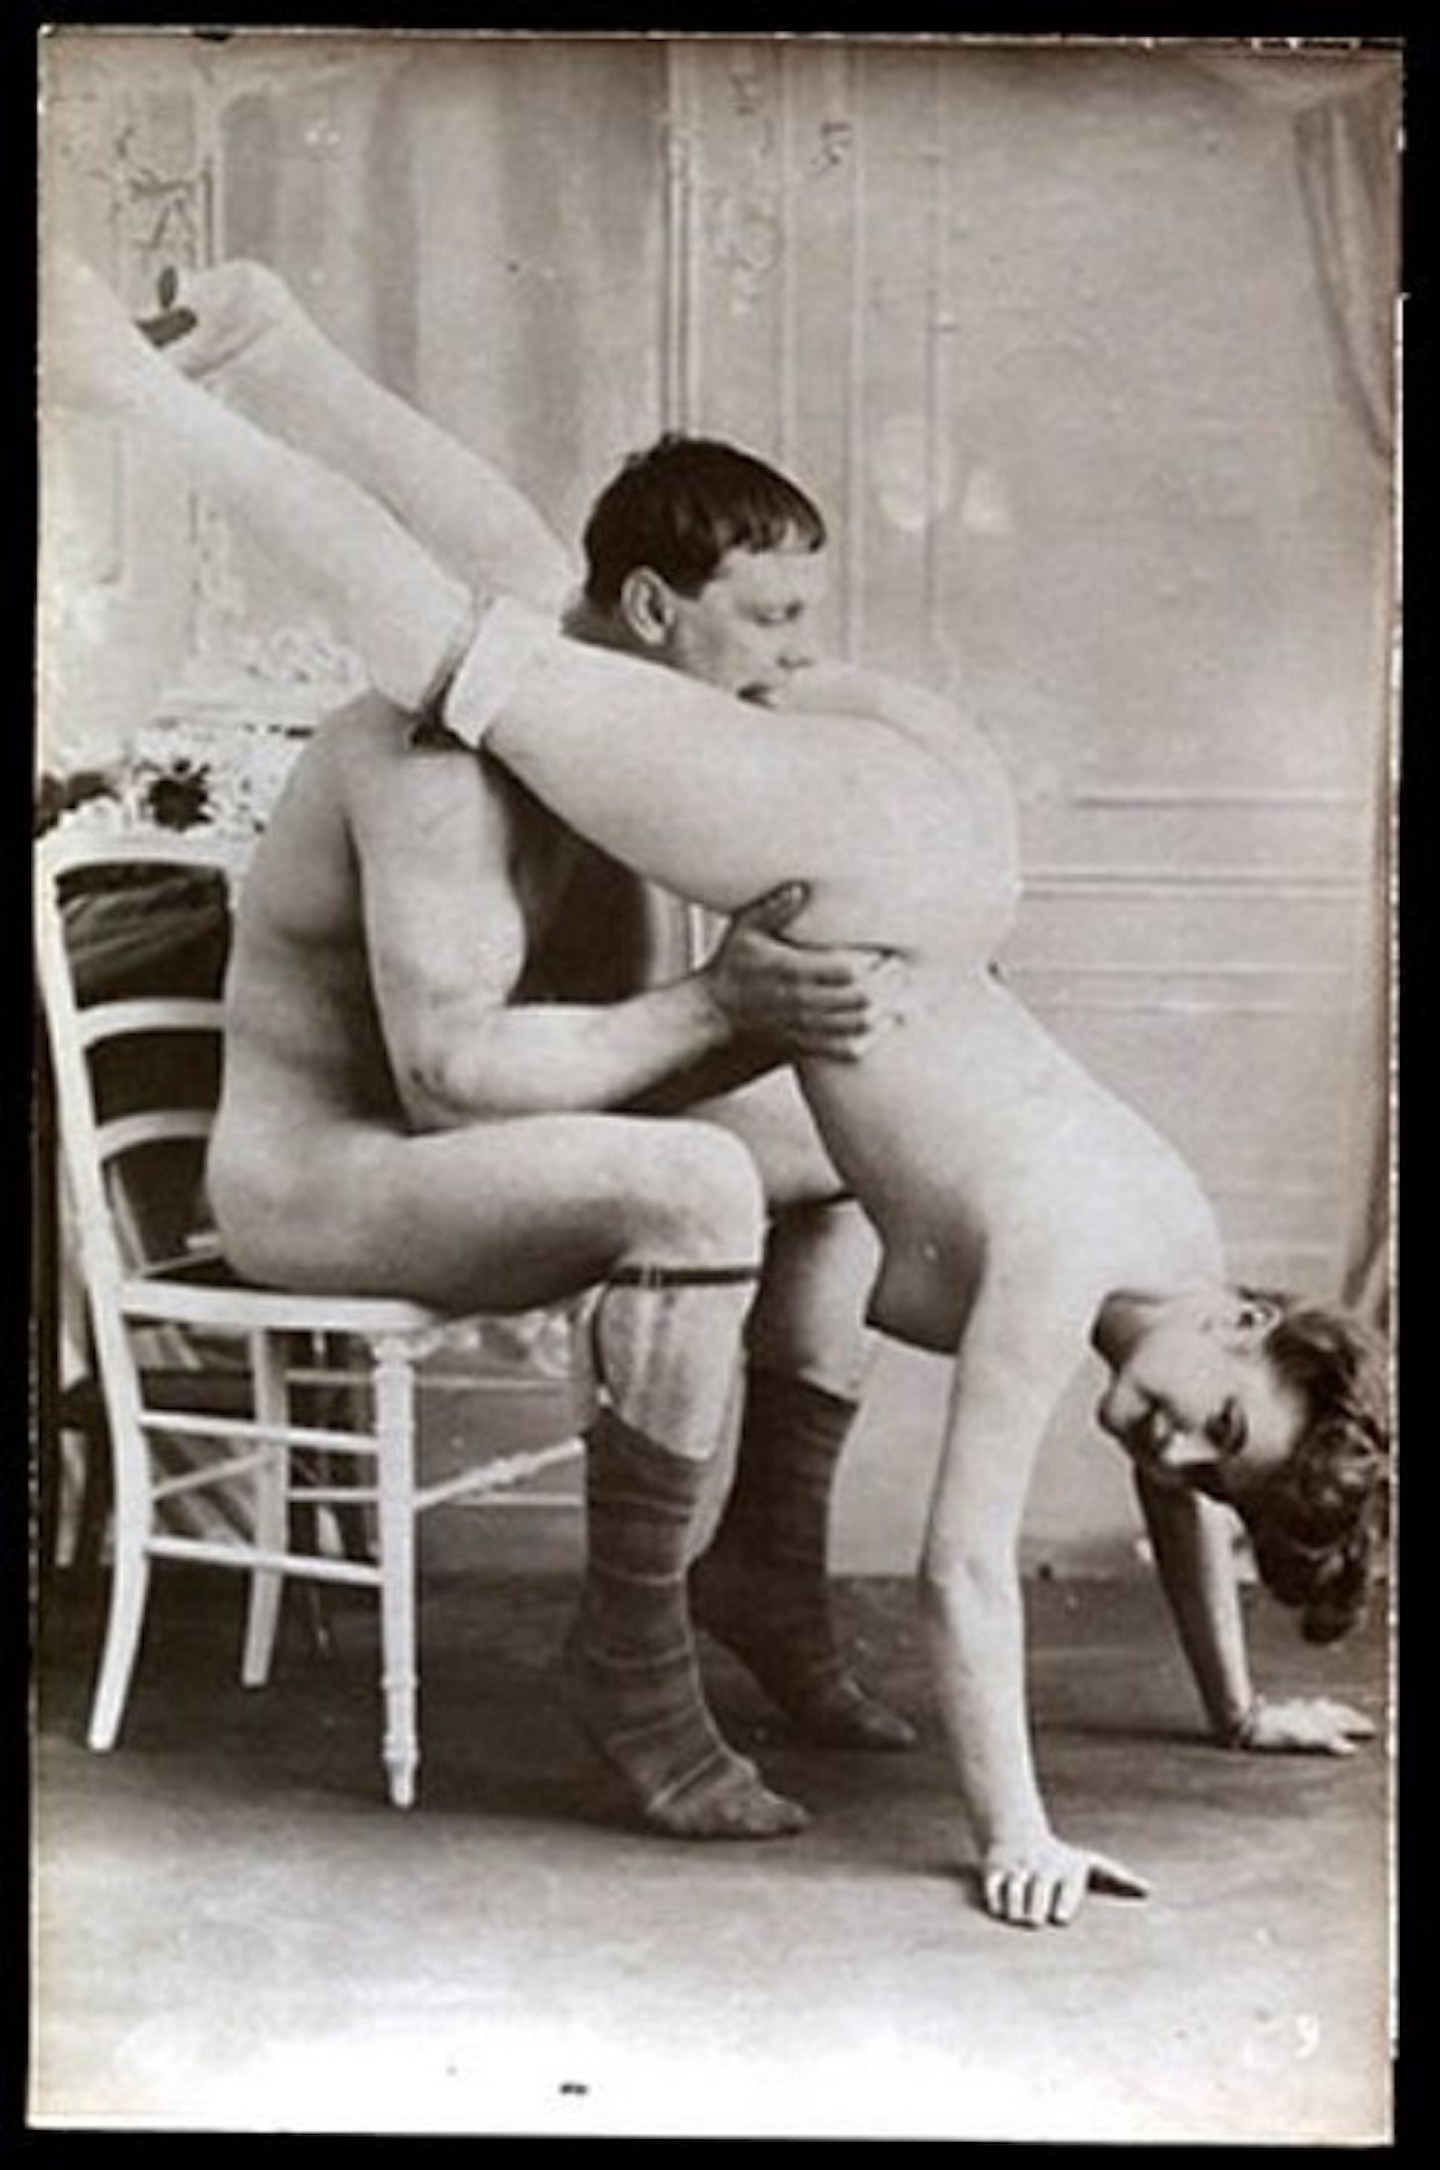 1800s Porno - The Unbridled Joy of Victorian Porn